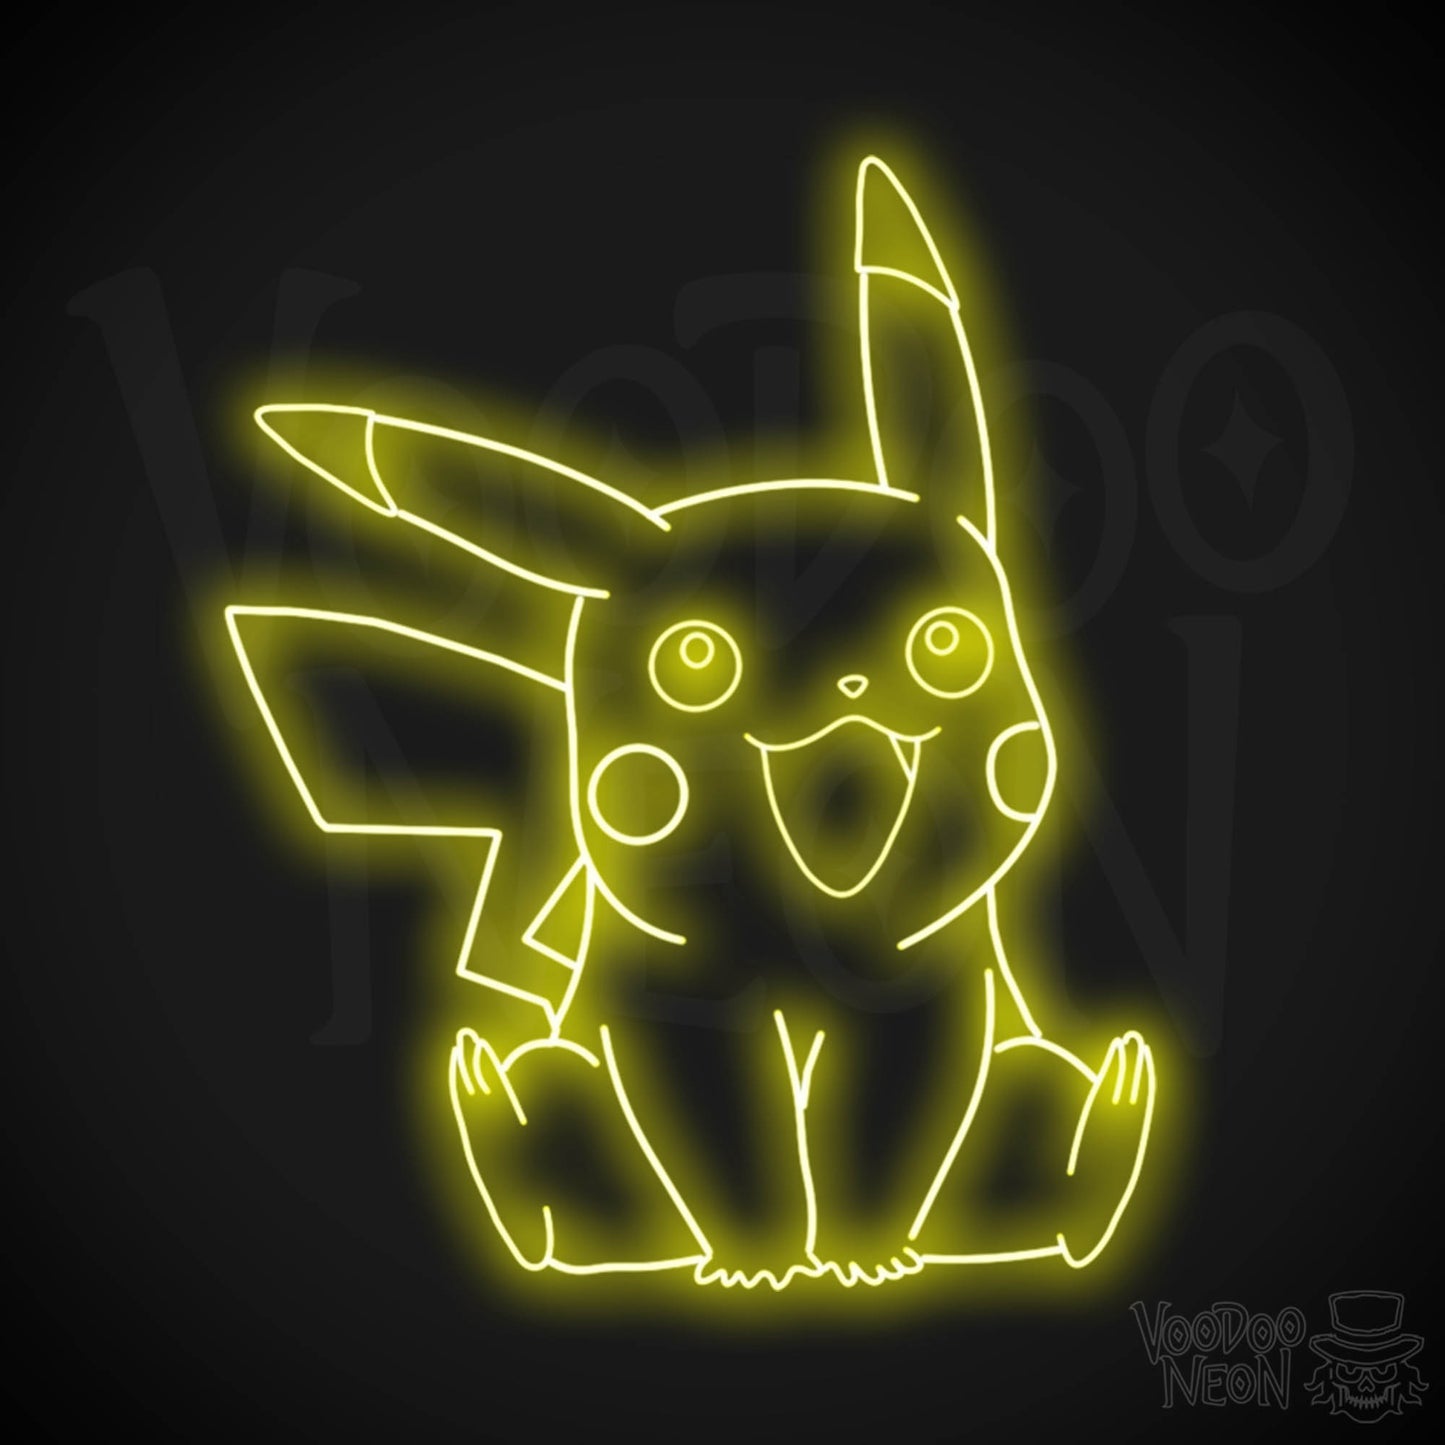 Pikachu Neon Sign - Pikachu Art - Pikachu Neon Wall Art - LED Sign - Color Yellow